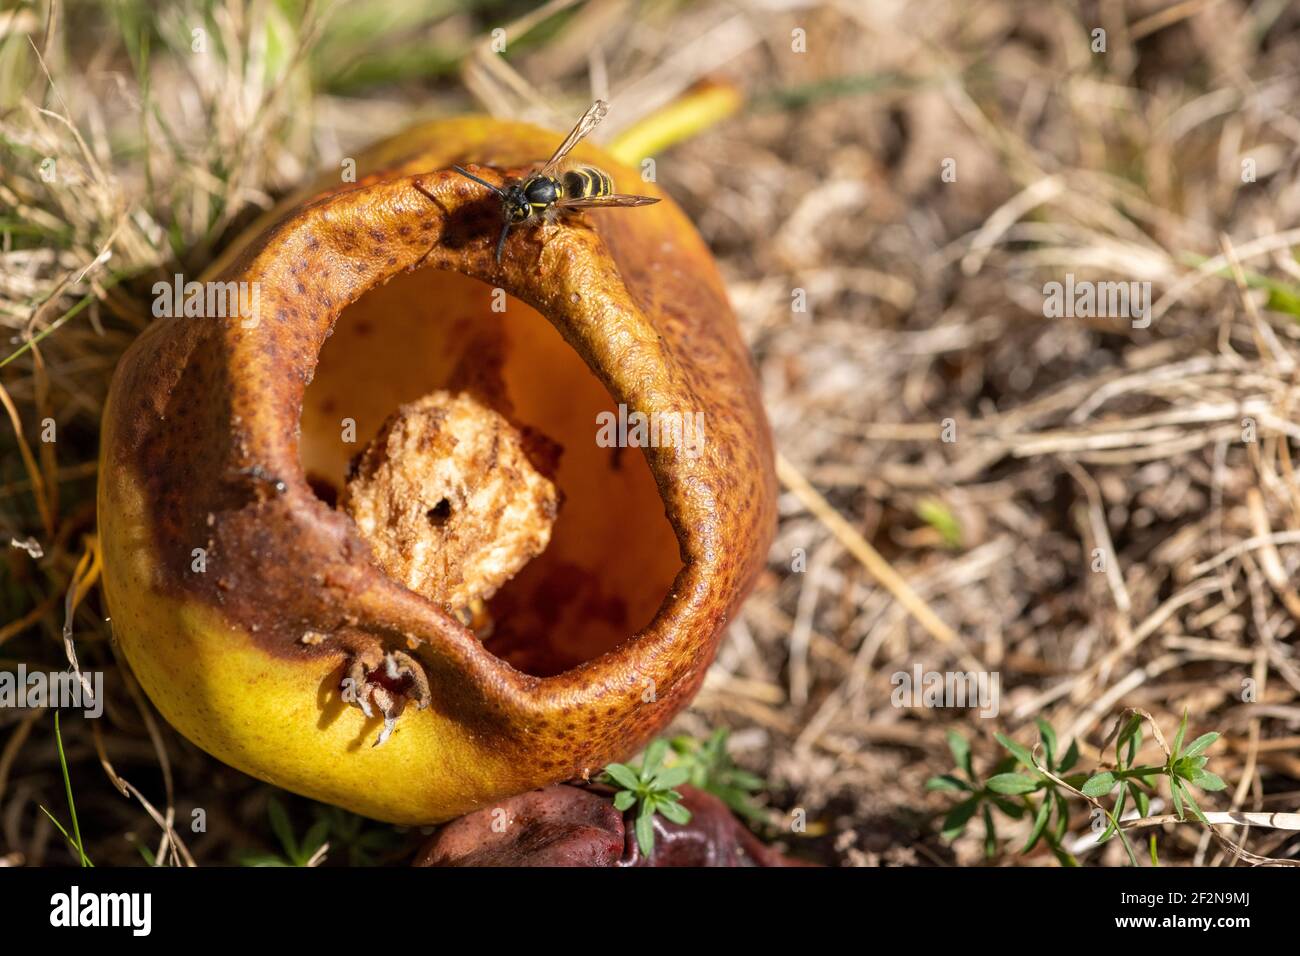 Bee on a fallen pear. Stock Photo